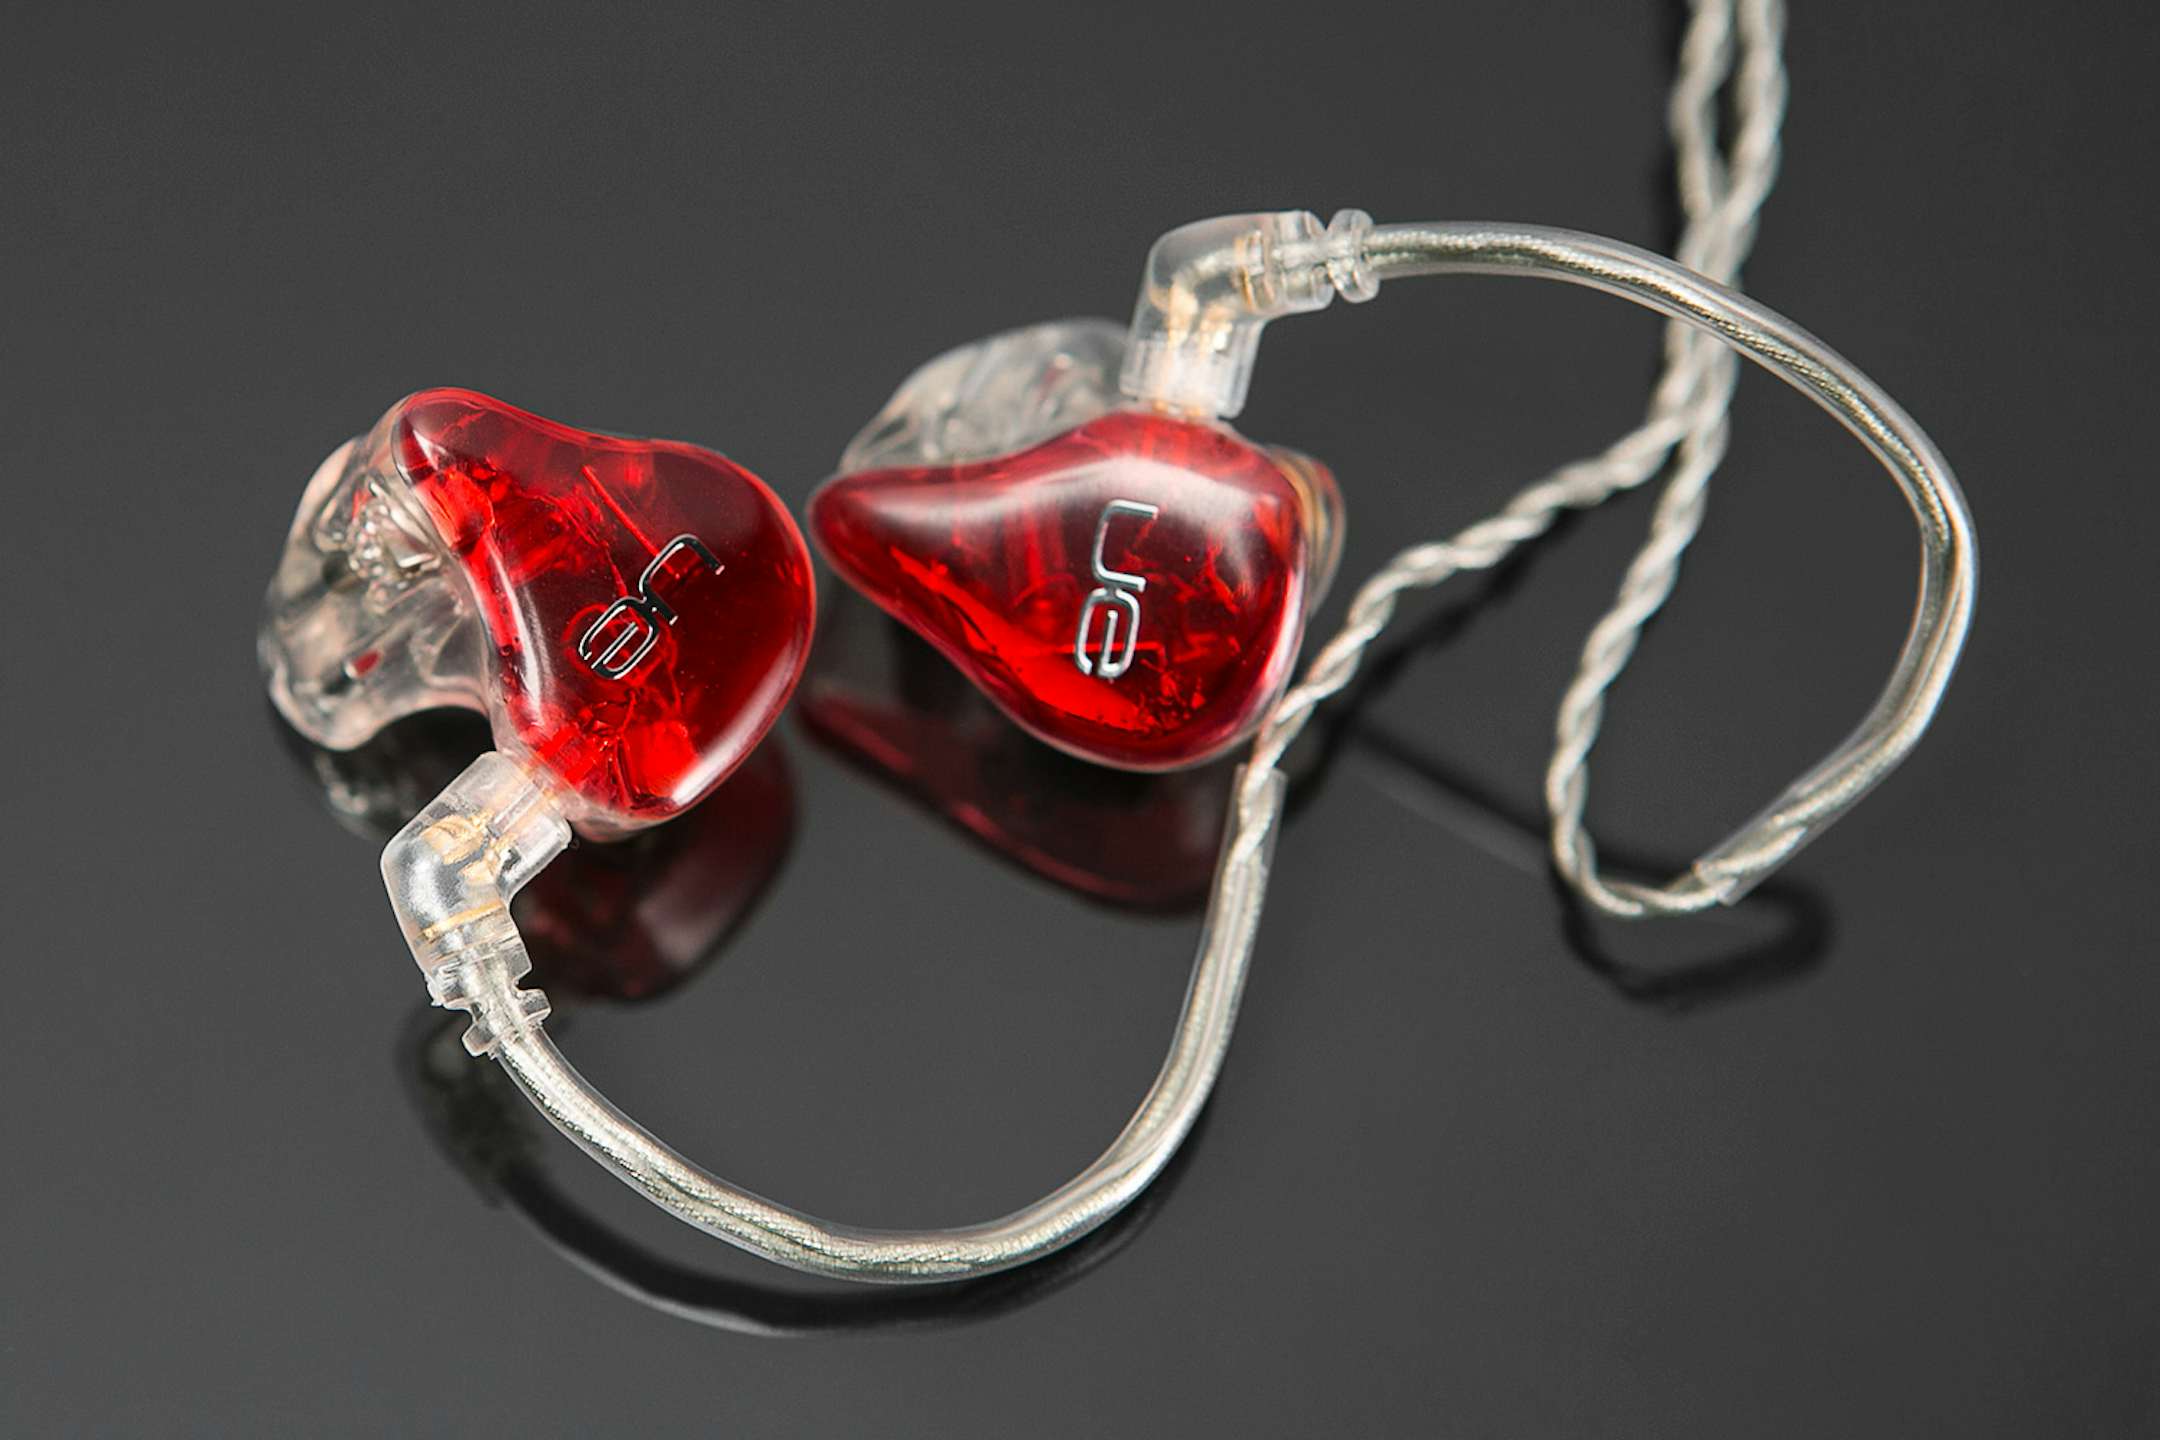 Ultimate Ears 18 Pro Custom In-Ear Monitors | Audiophile | Headphones